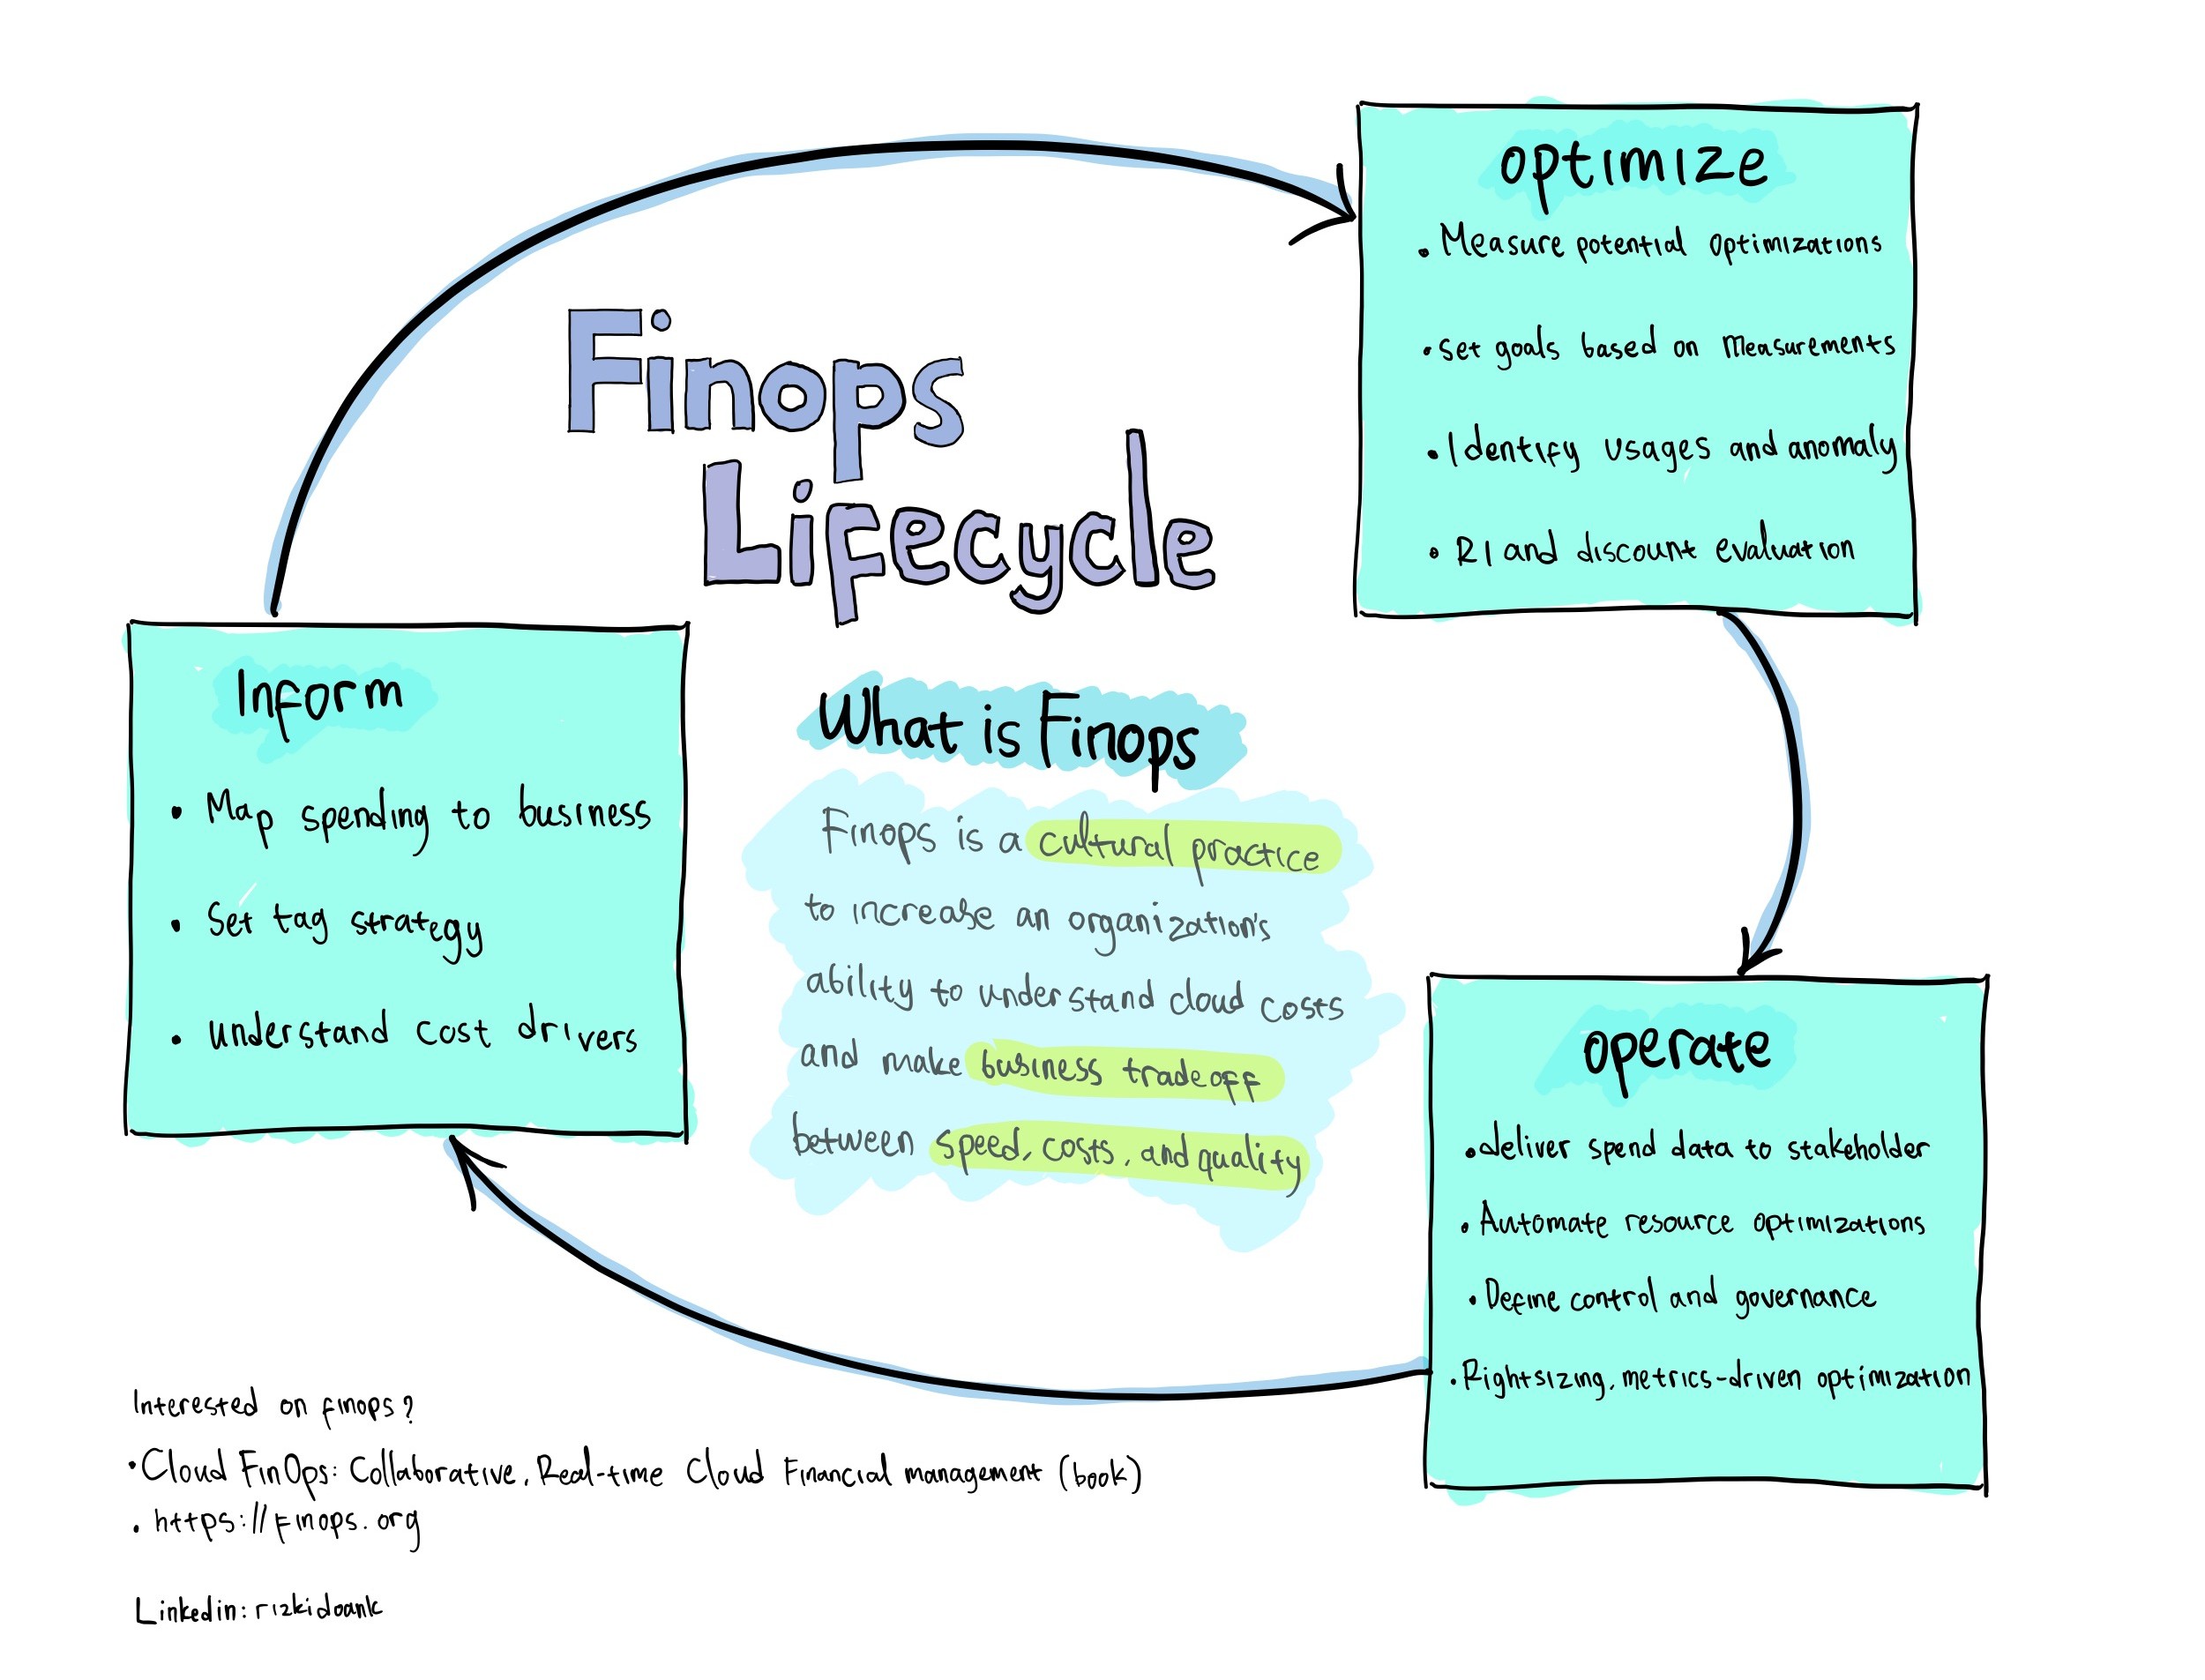 FinOps Lifecycle